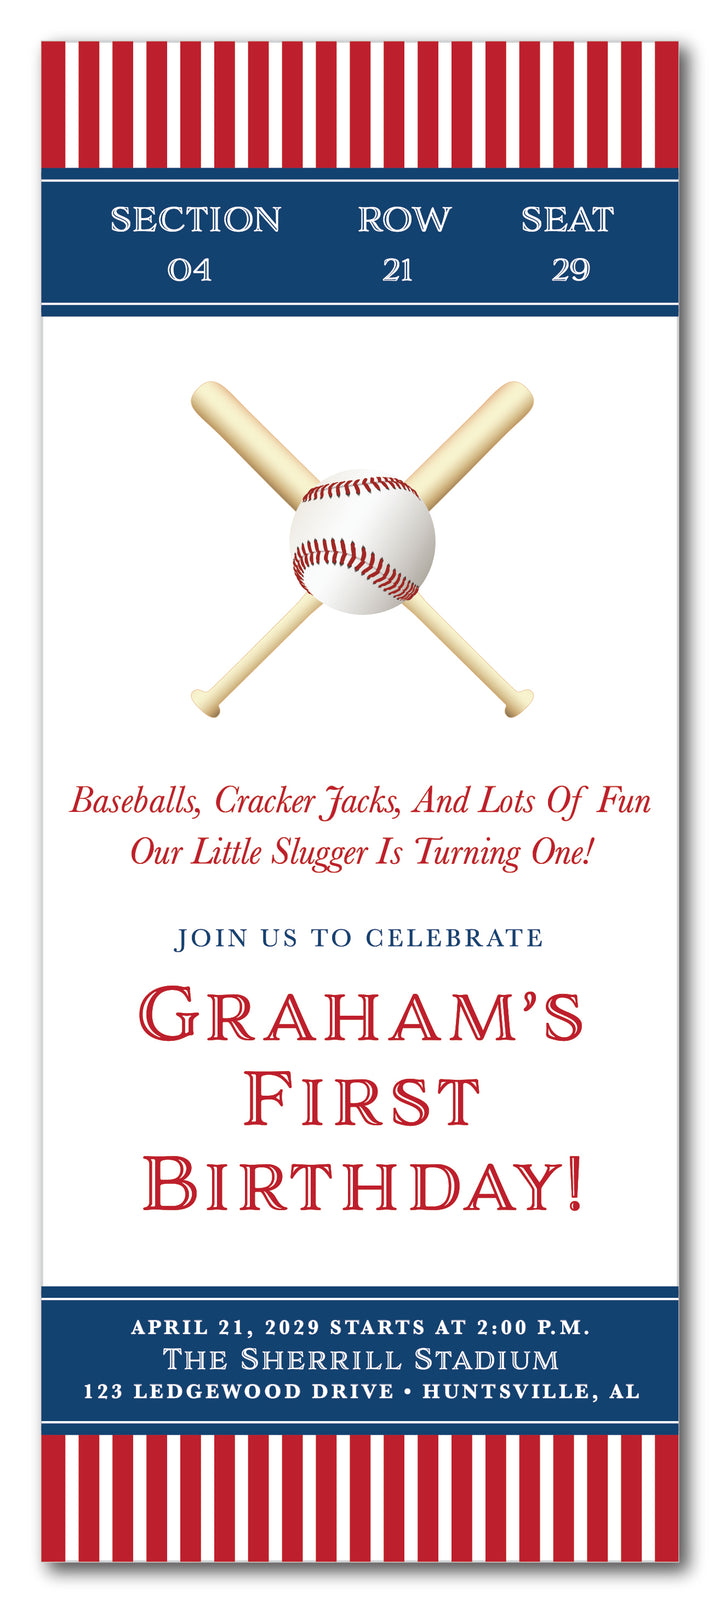 The Baseball IV Birthday Party Invitation